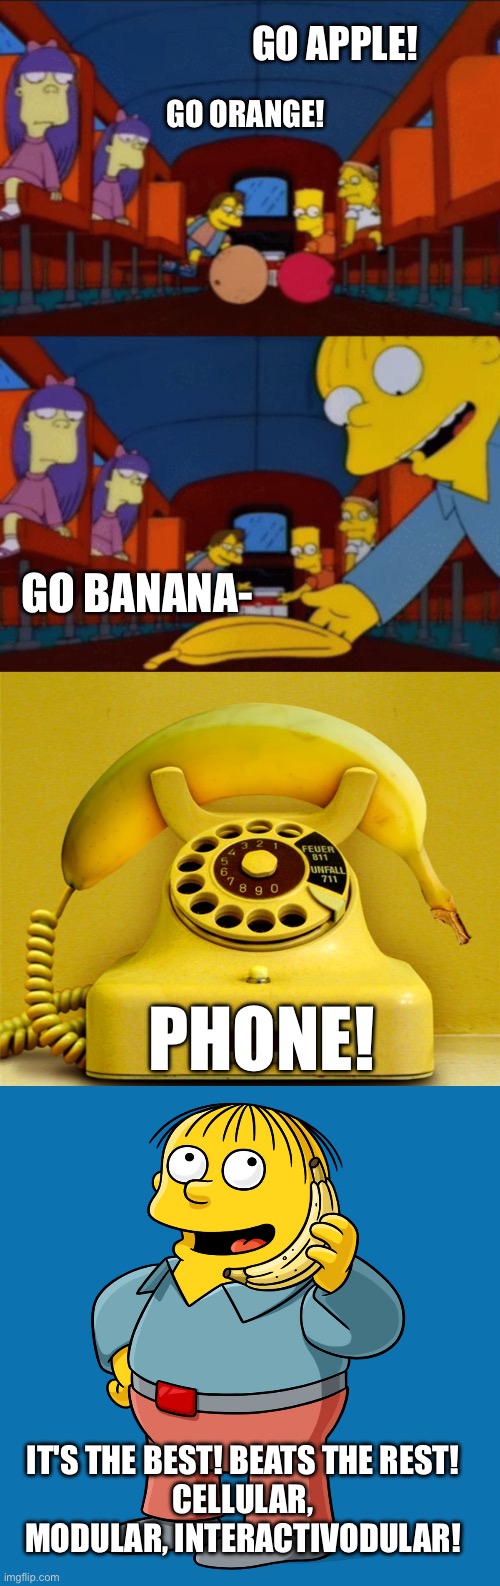 Go Banana phone! | GO APPLE! GO ORANGE! GO BANANA-; PHONE! IT'S THE BEST! BEATS THE REST!
CELLULAR, MODULAR, INTERACTIVODULAR! | image tagged in go apple go orange go banana simpsons,banana phone,ralph banana phone,the simpsons,phone,banana | made w/ Imgflip meme maker